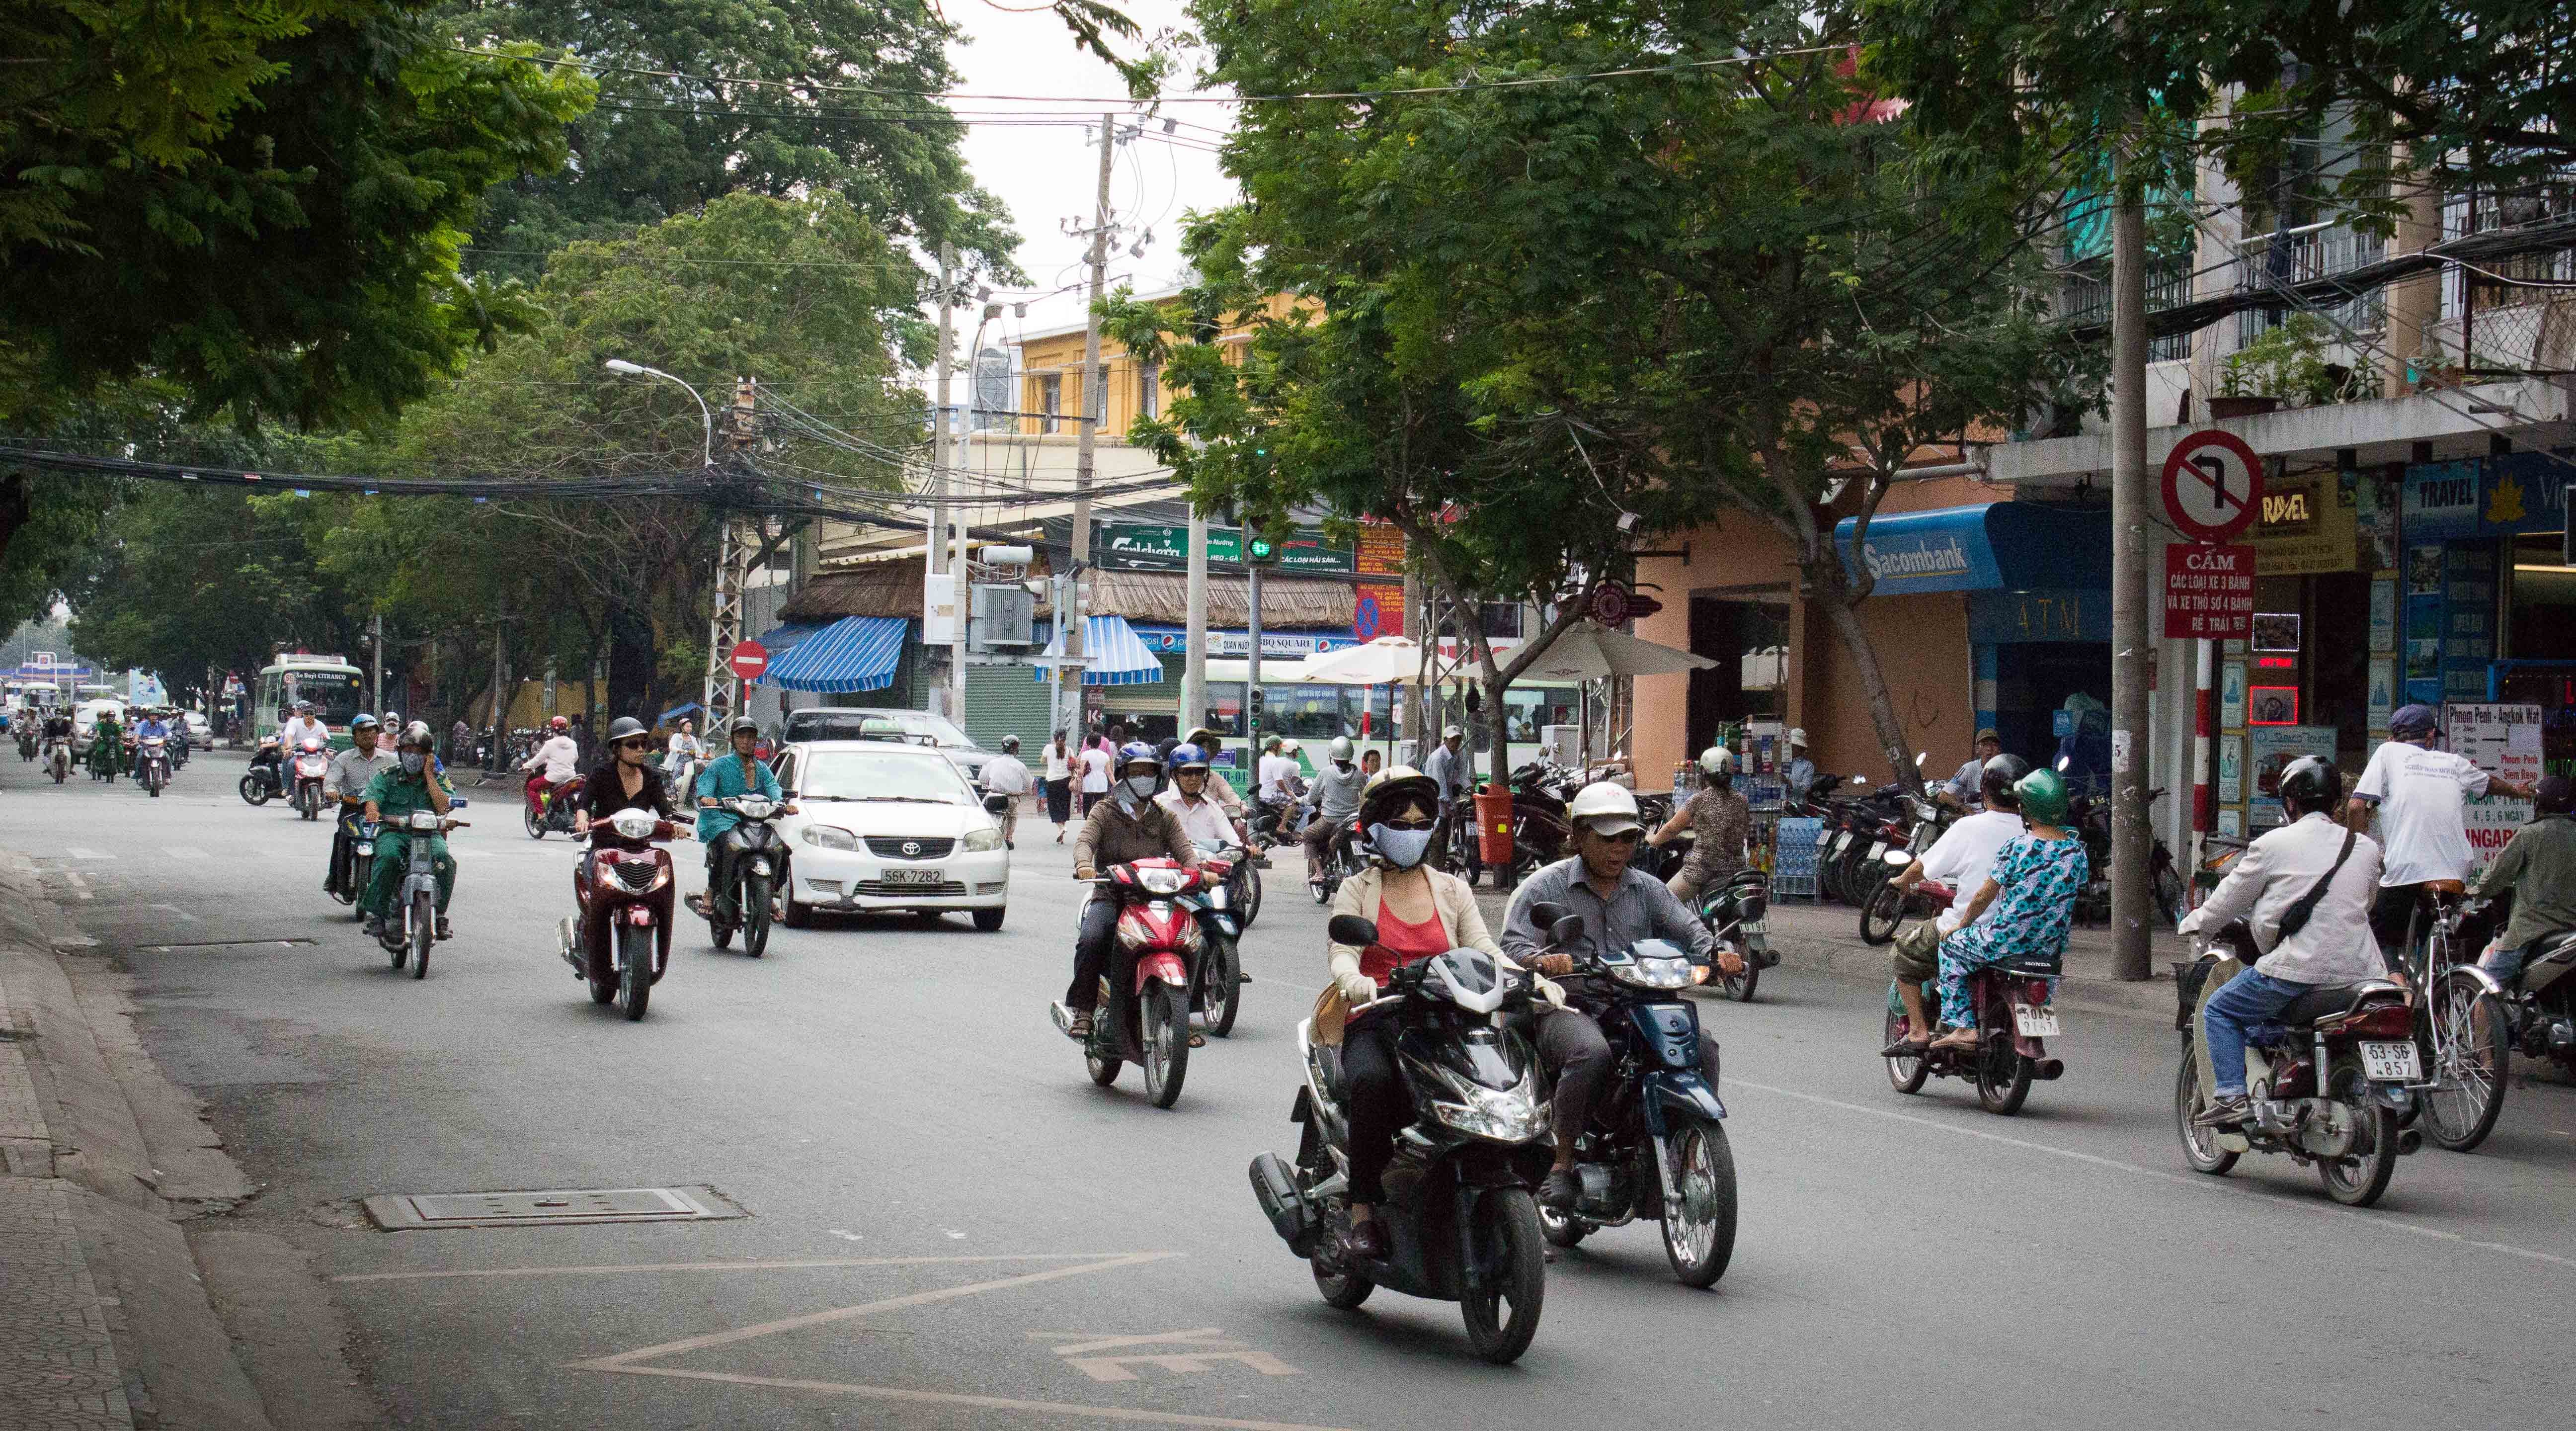 Photos from Saigon Vietnam 2012